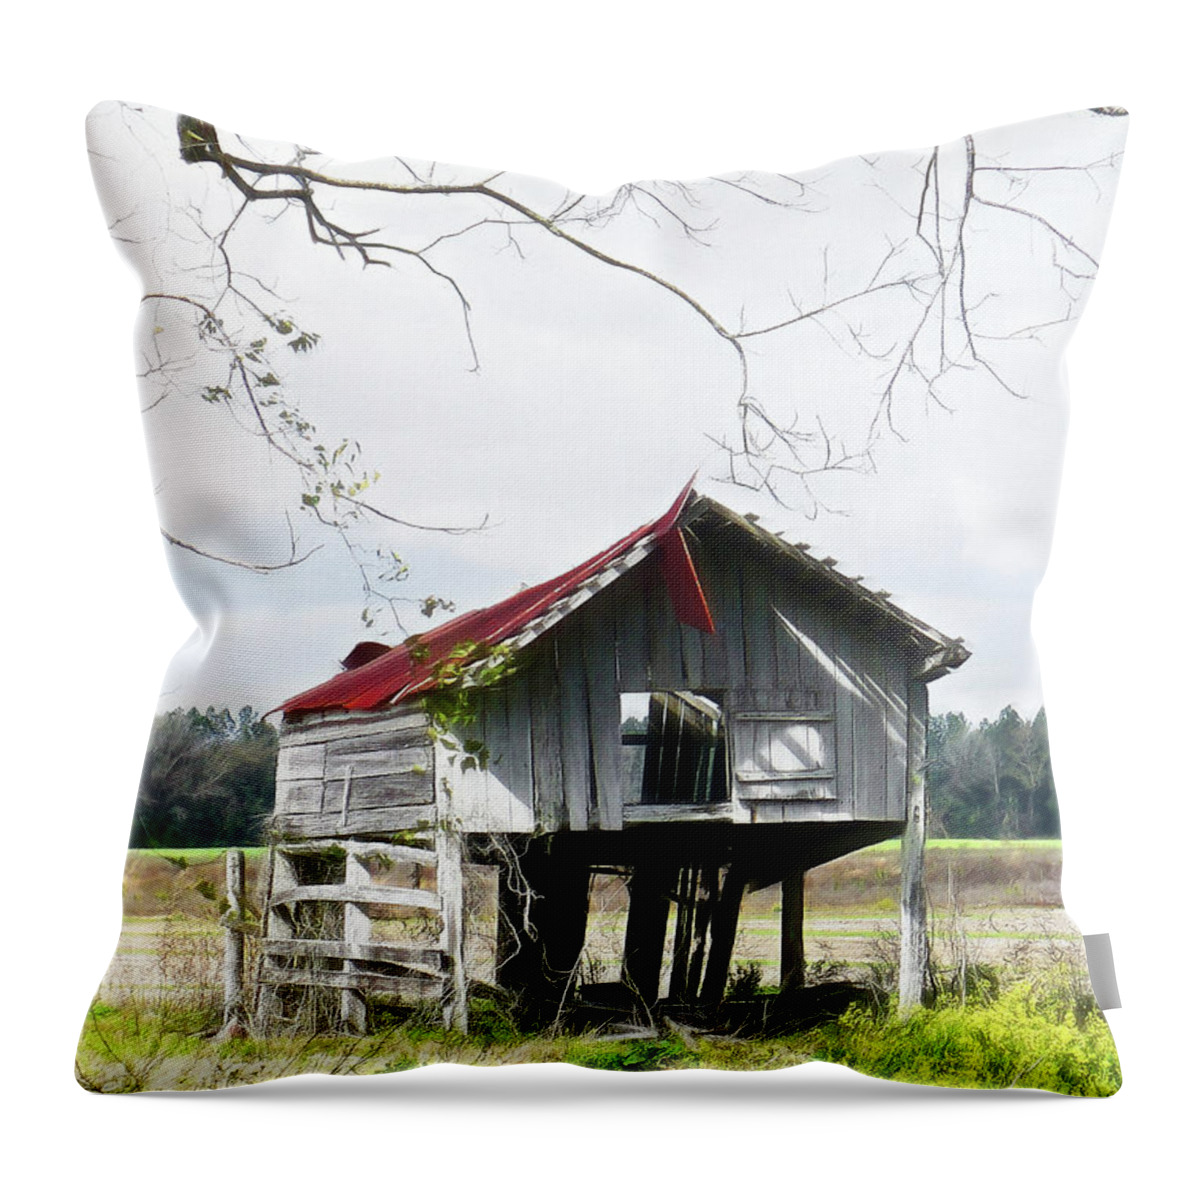 Barn Throw Pillow featuring the photograph Seen Better Days by Susan Hope Finley